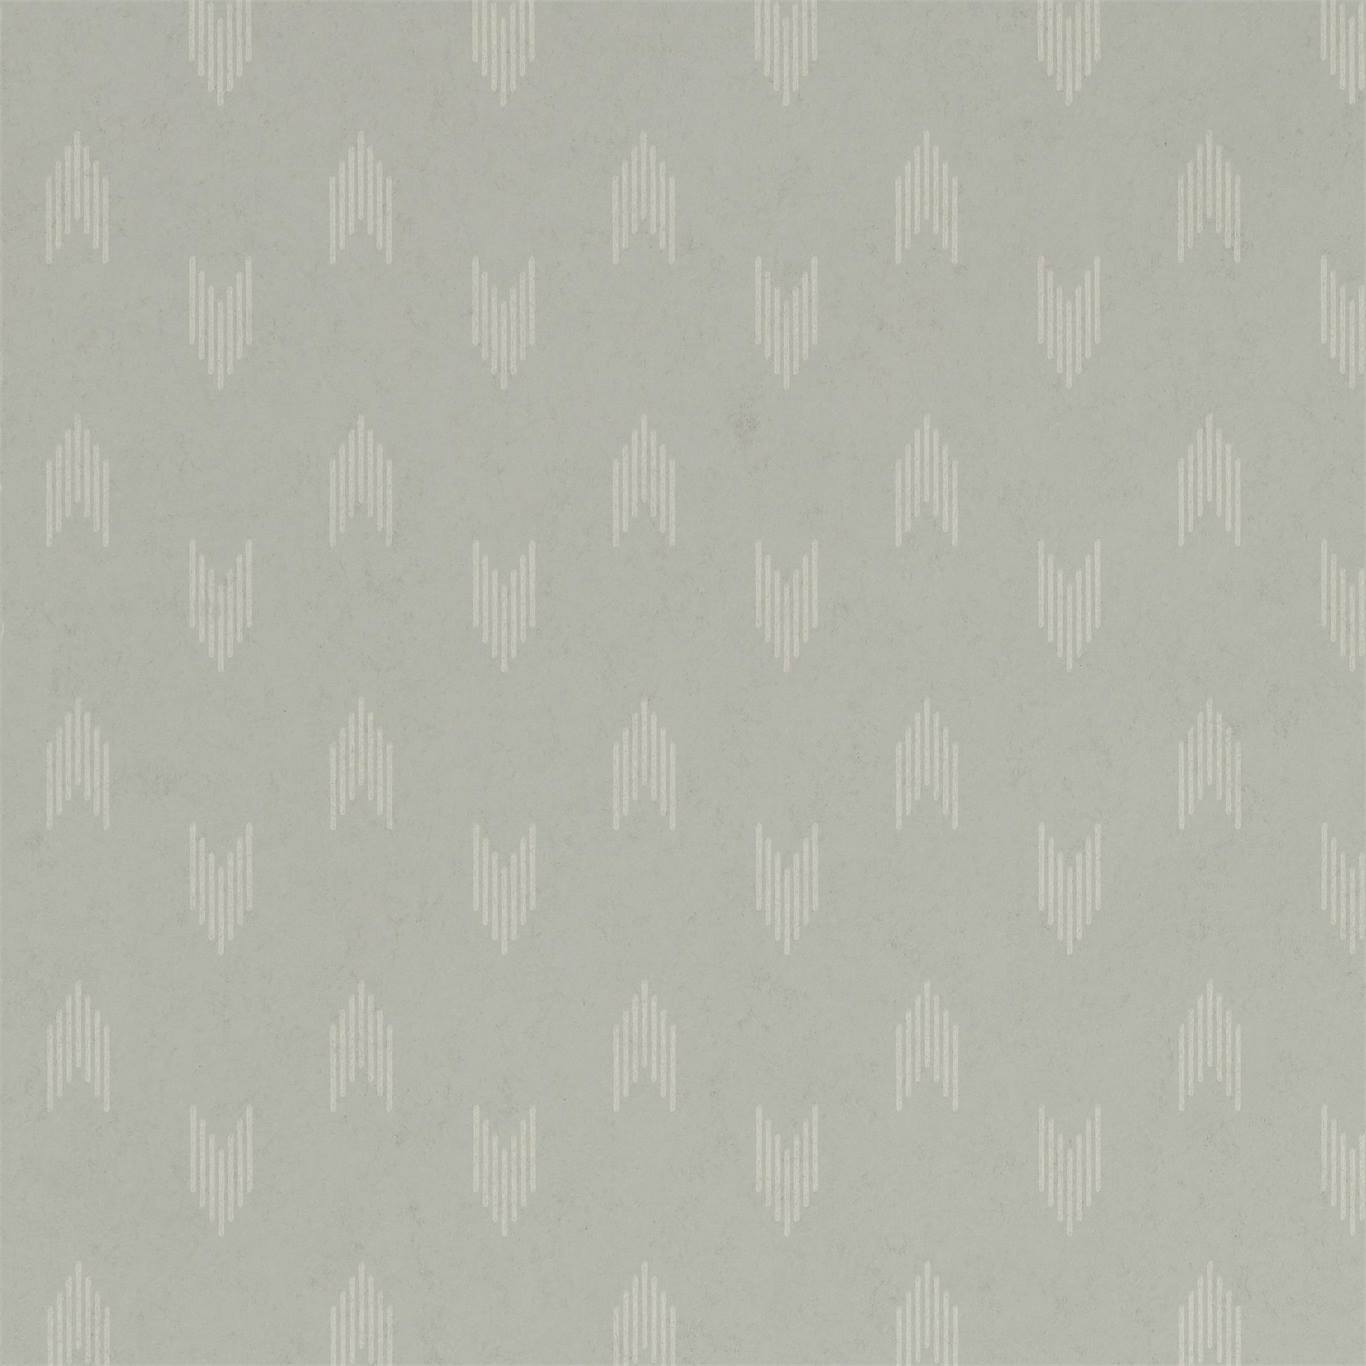 Henton Grey Wallpaper DLMW216884 by Sanderson